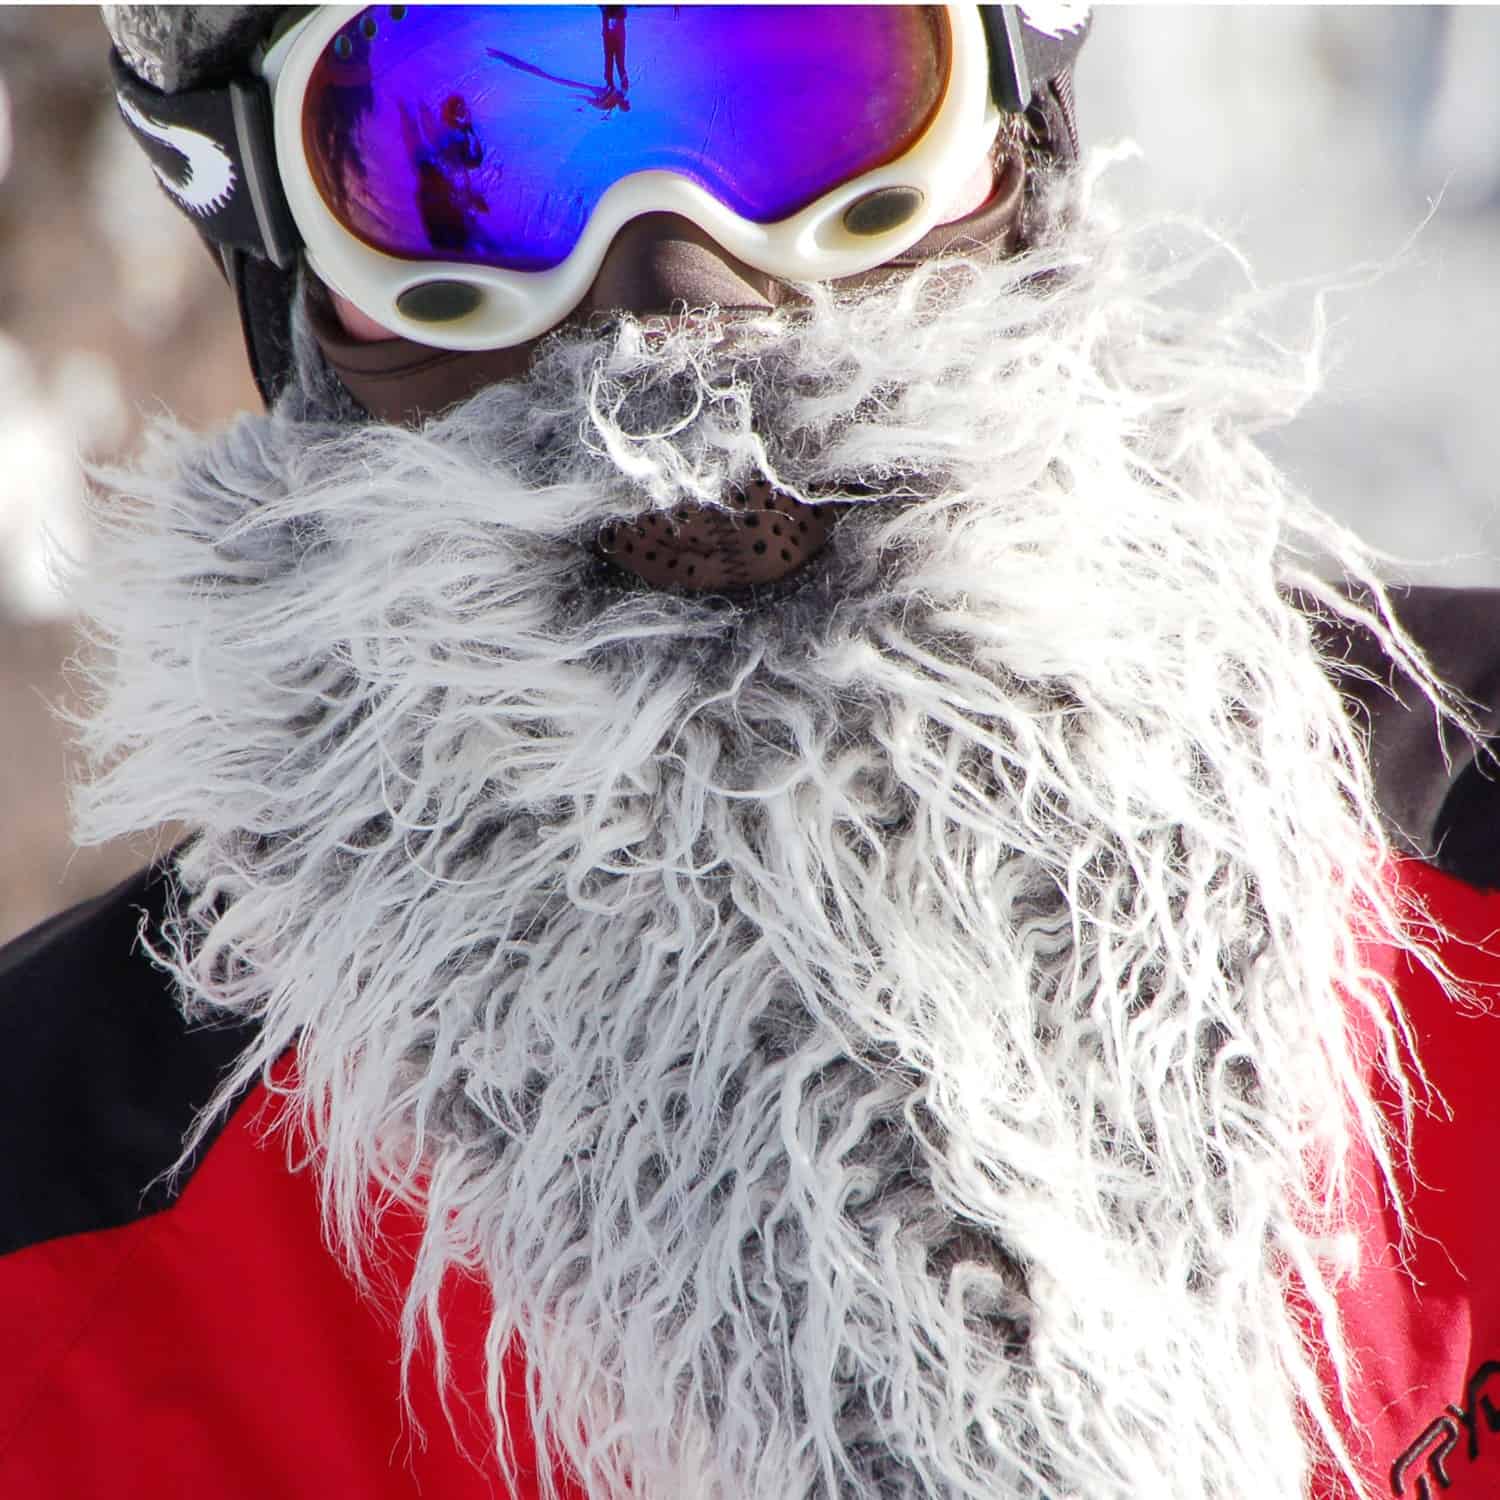 Beardski Bearded Ski Mask Buy Cool Snowboard Equipment